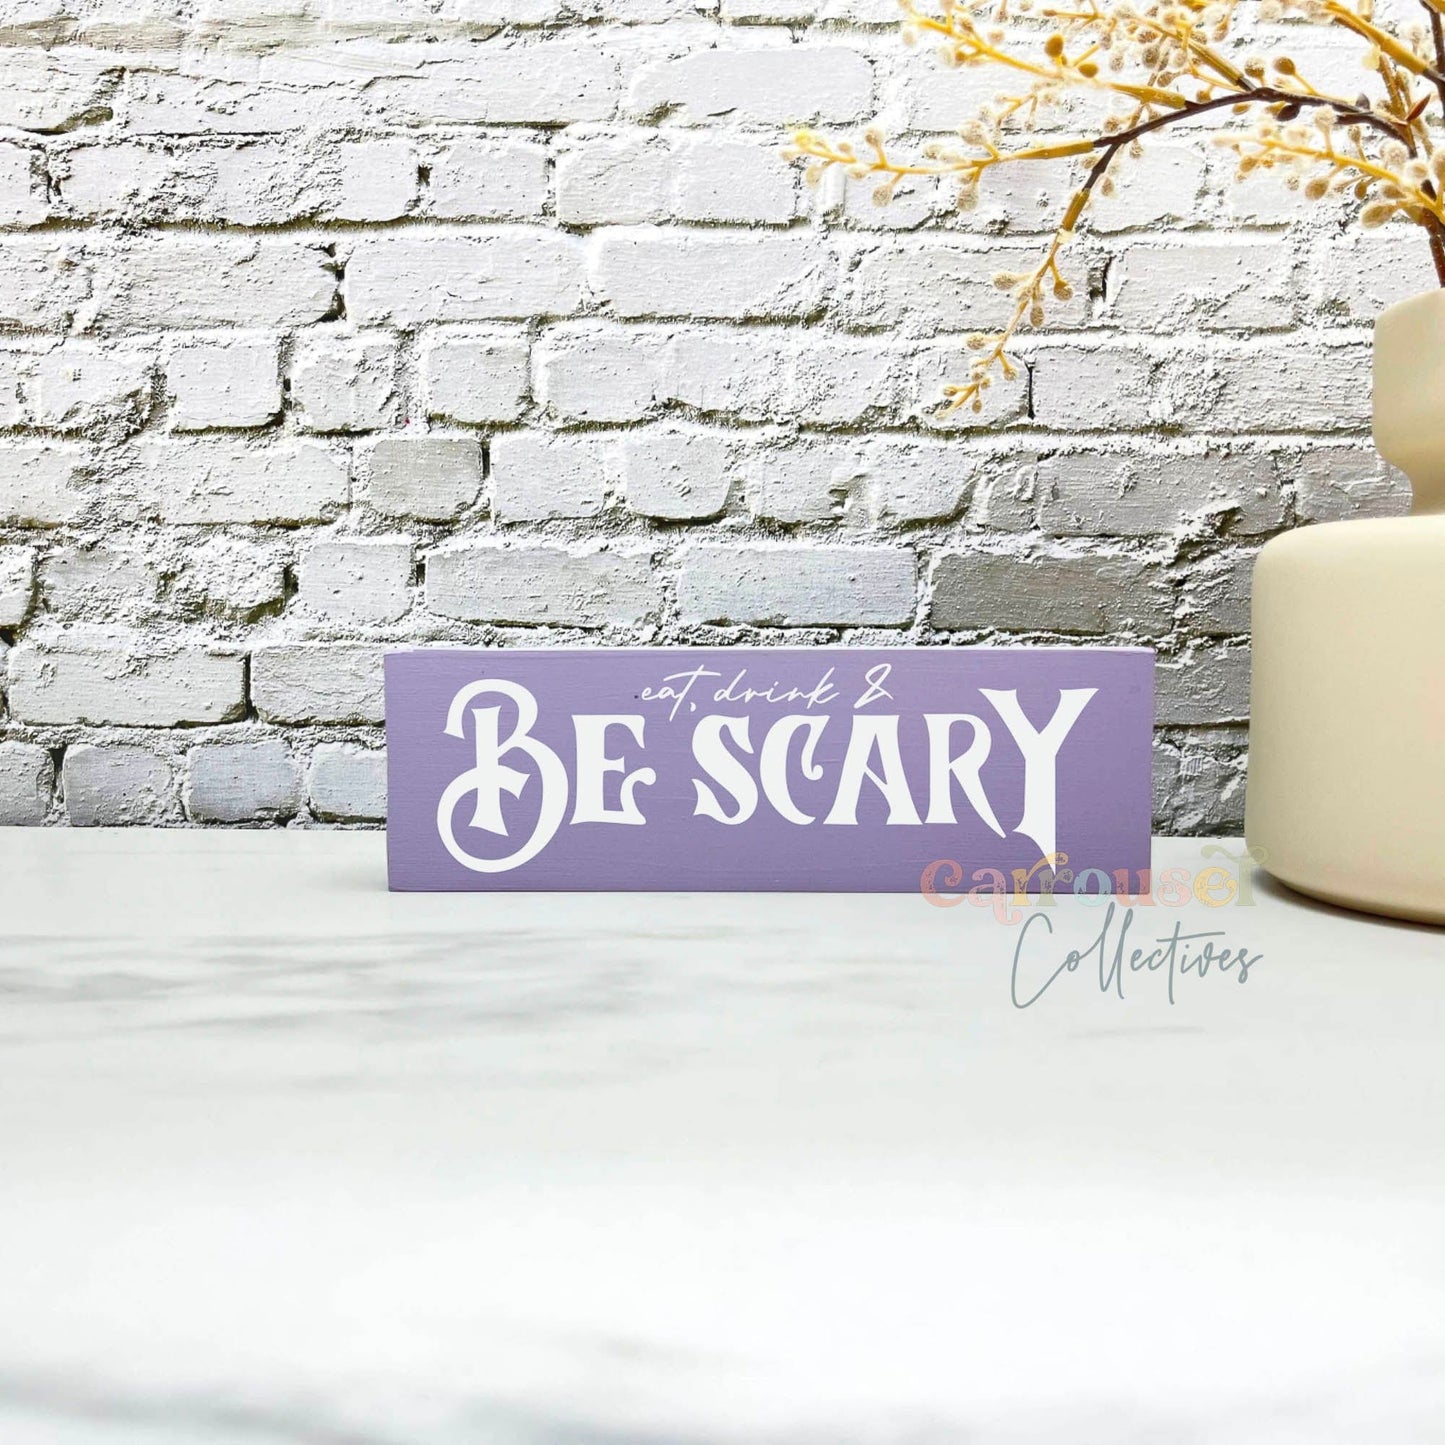 Be scary Wood Sign, Halloween Wood Sign, Halloween Home Decor, Spooky Decor